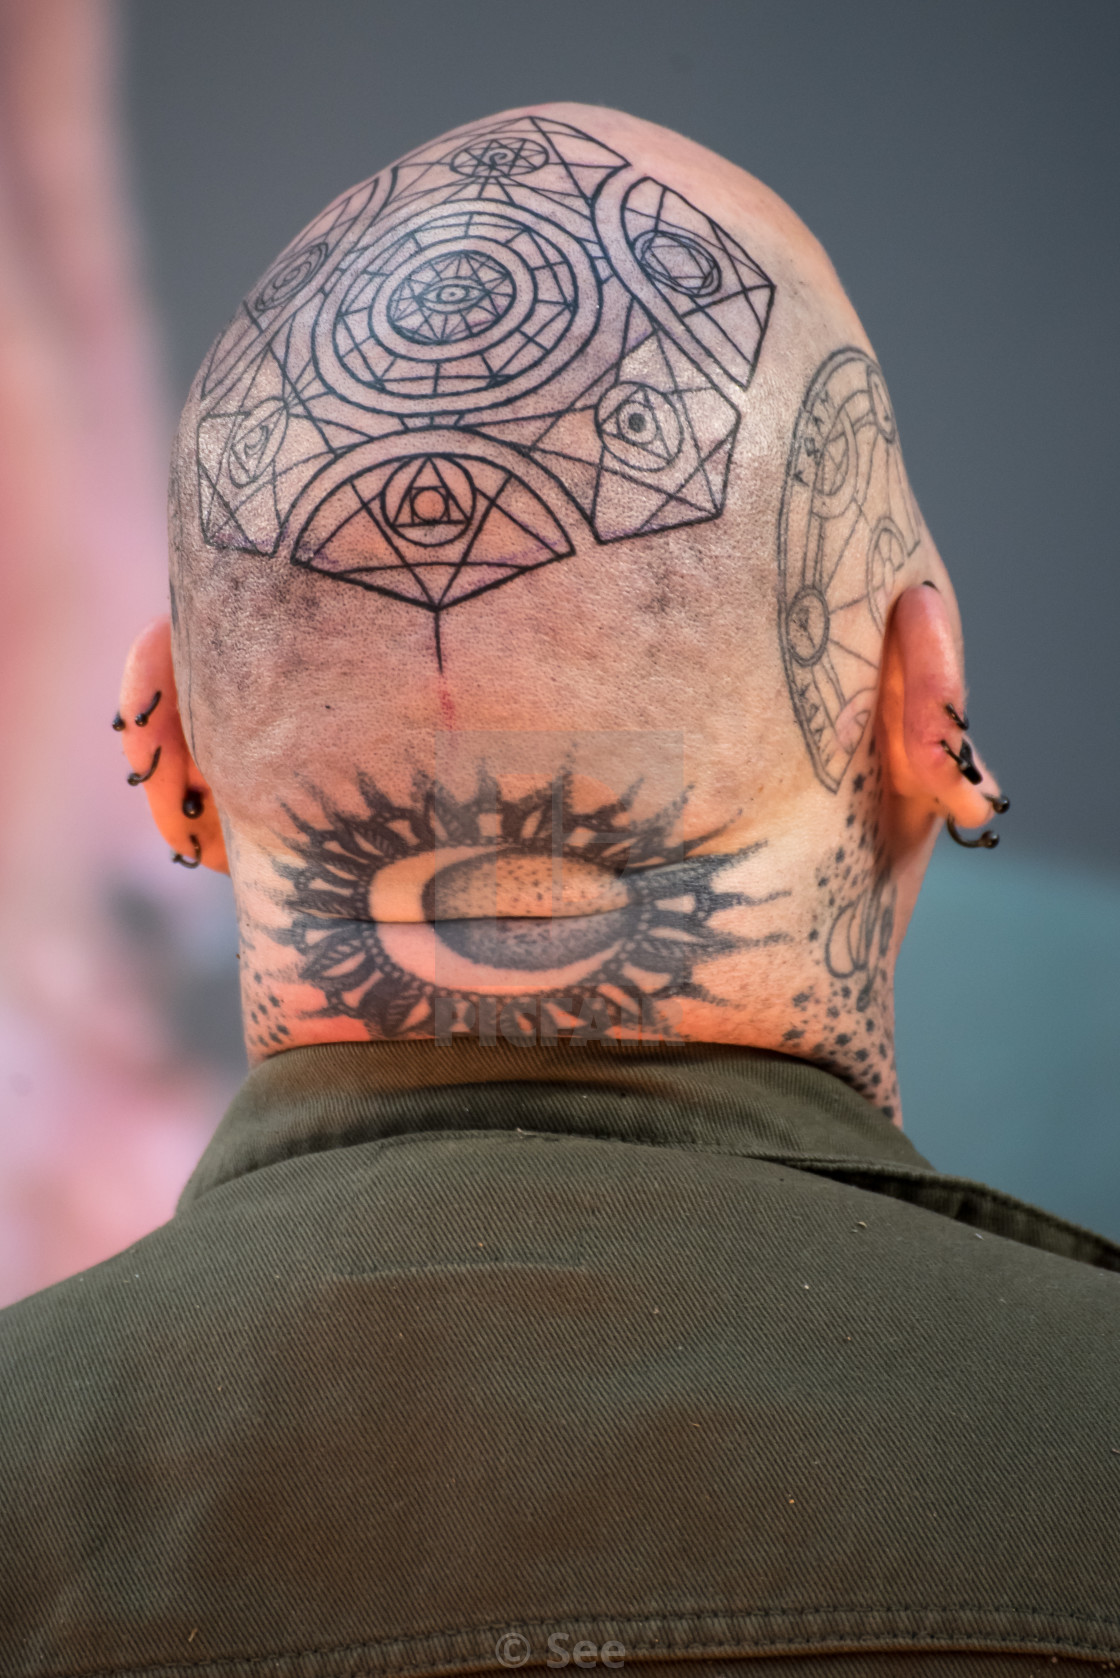 15 Unique Irish Tattoo Designs Inspired by Celtic Mythology